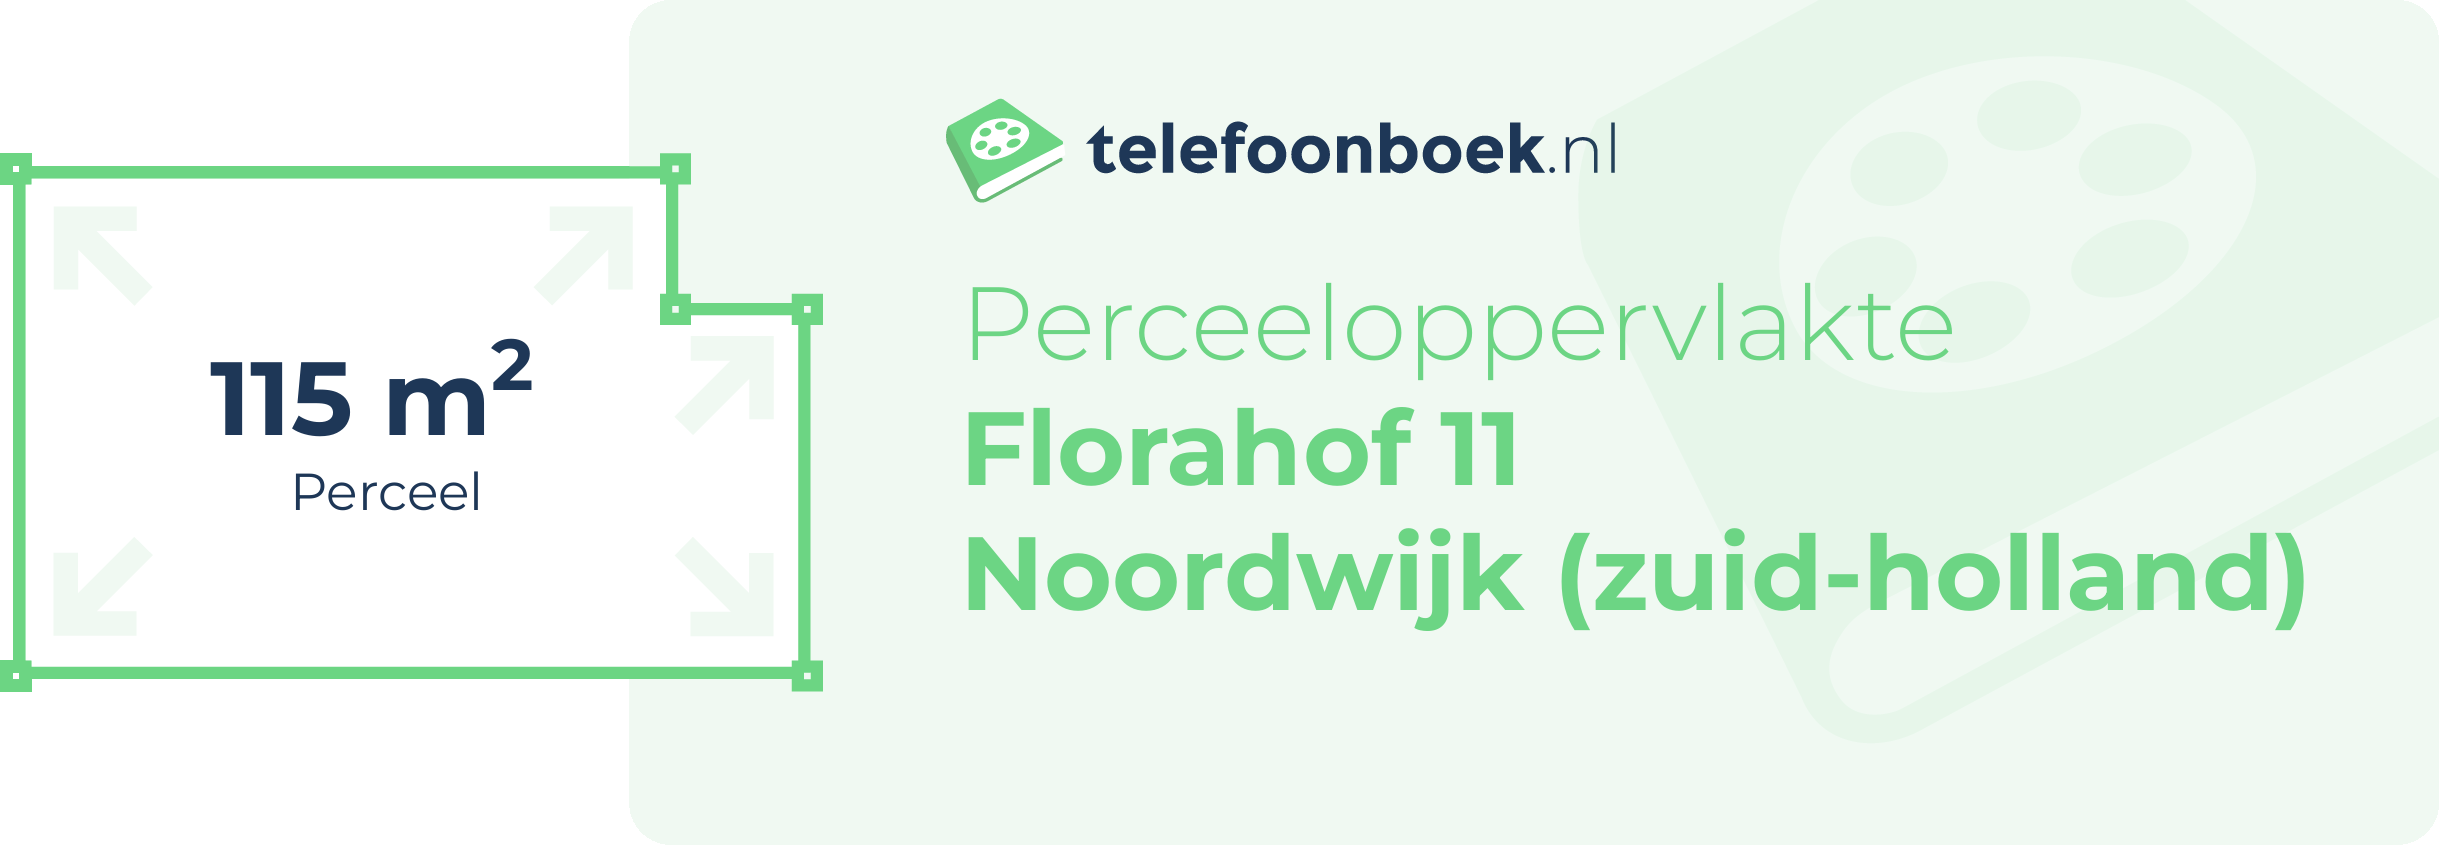 Perceeloppervlakte Florahof 11 Noordwijk (Zuid-Holland)